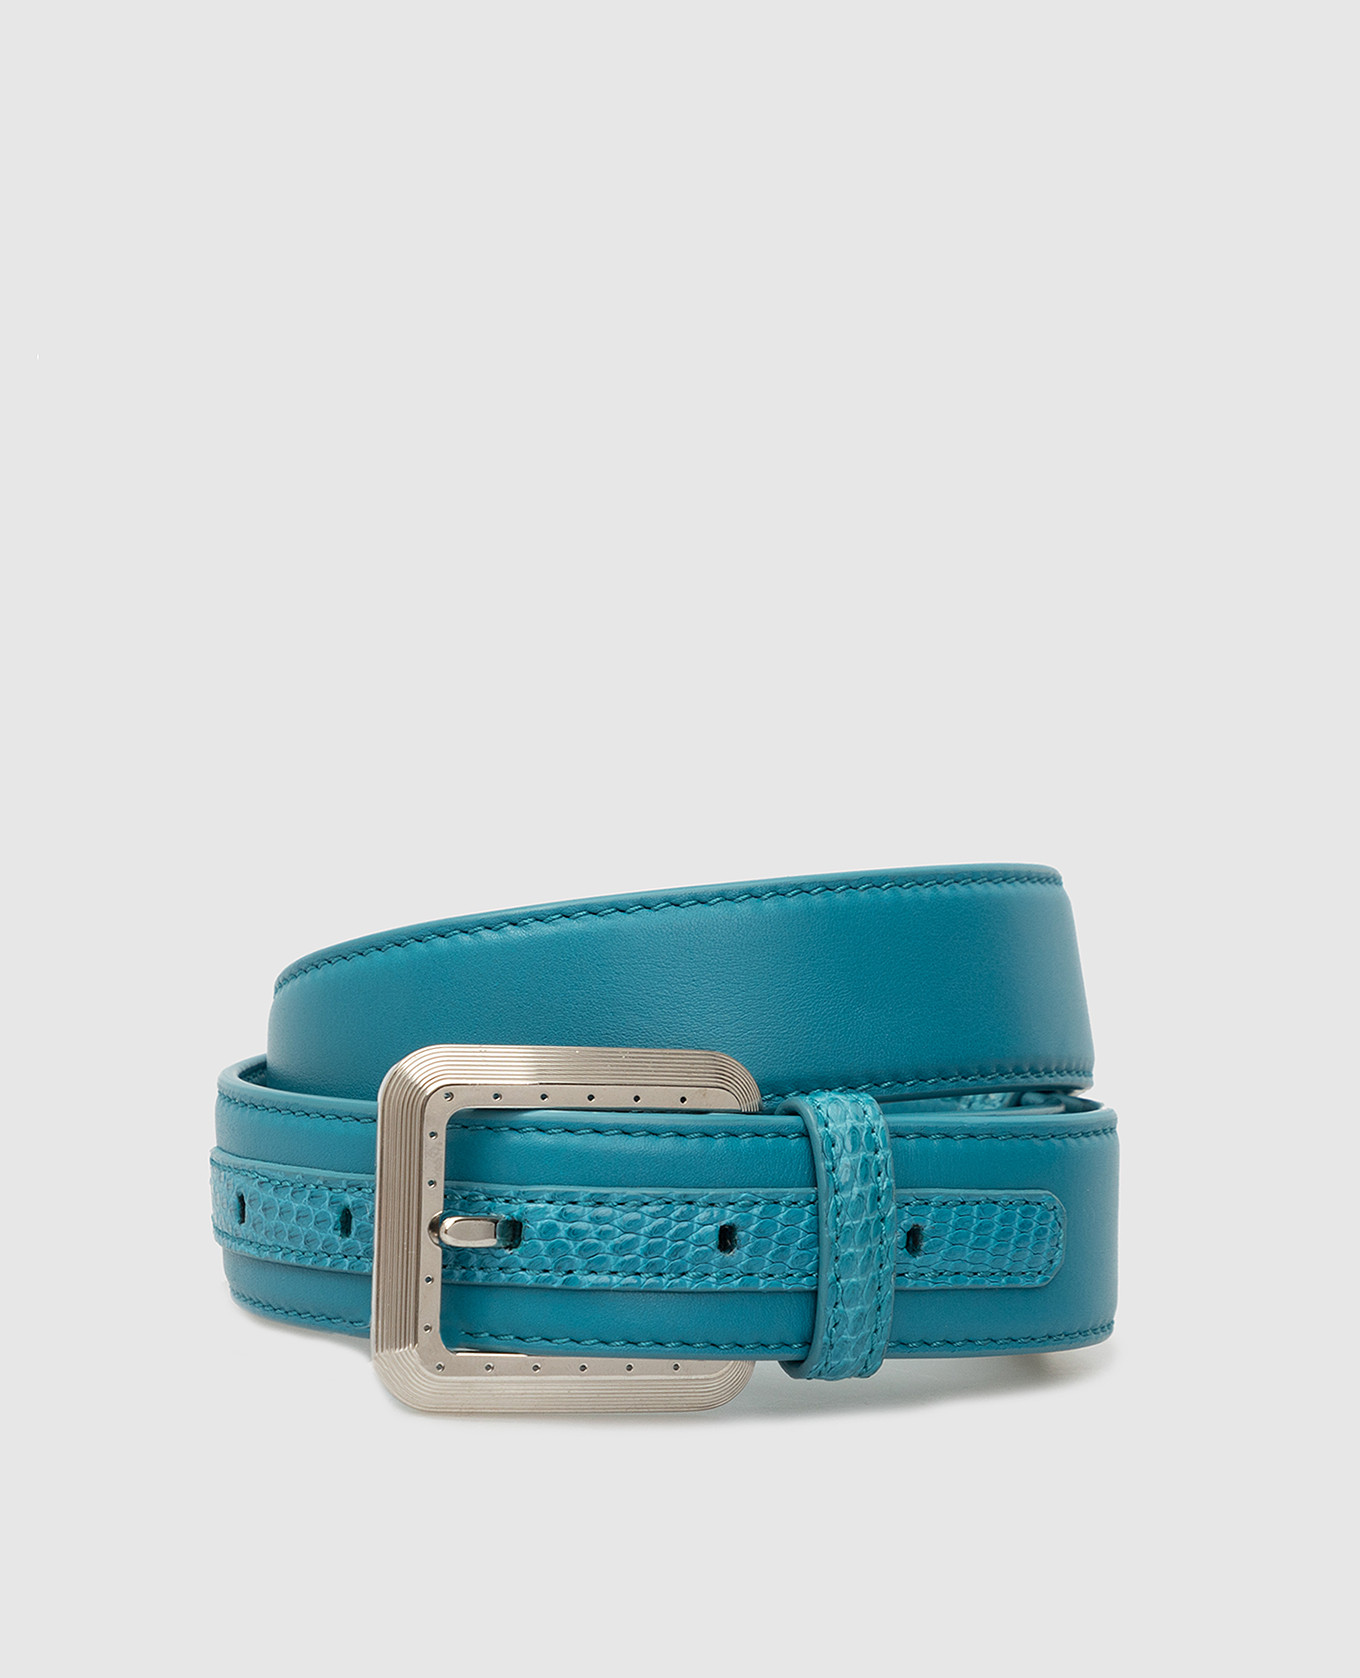 Children's turquoise leather belt